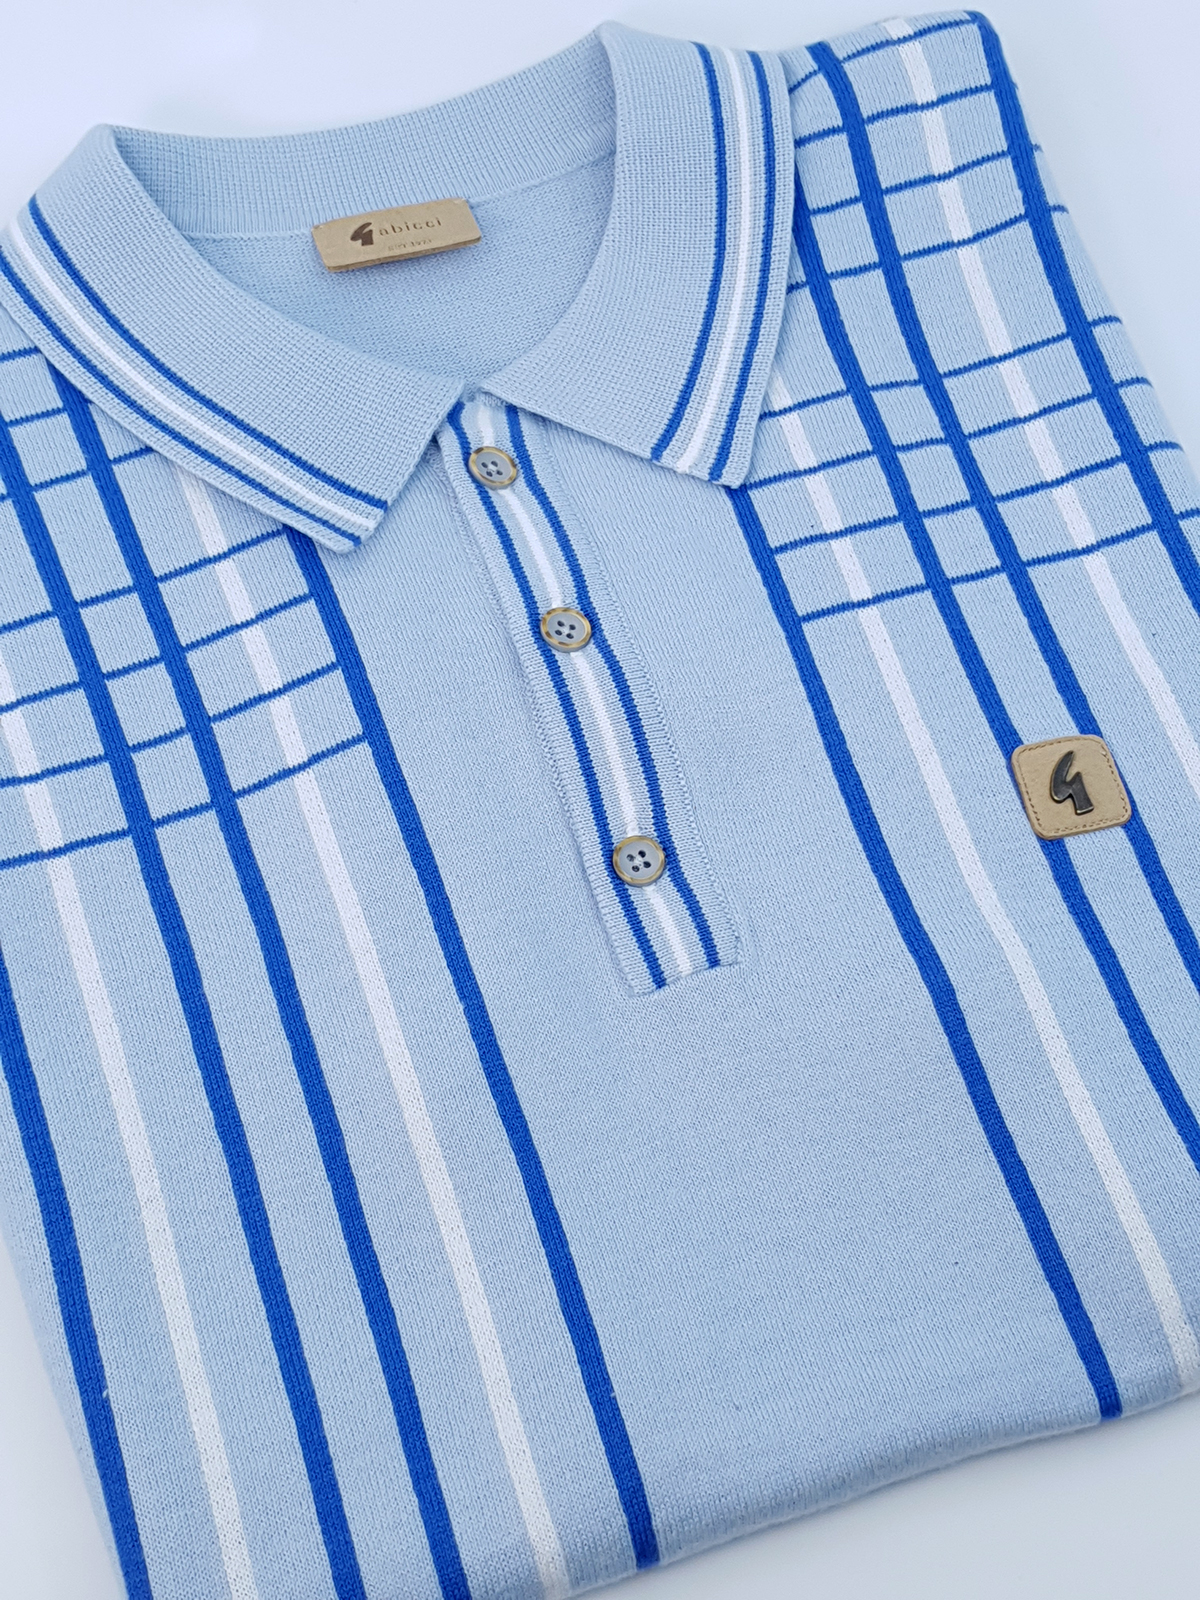 Gabicci Short Sleeve Polo In Sky Blue with Kris Kross Pattern – Mod Shoes